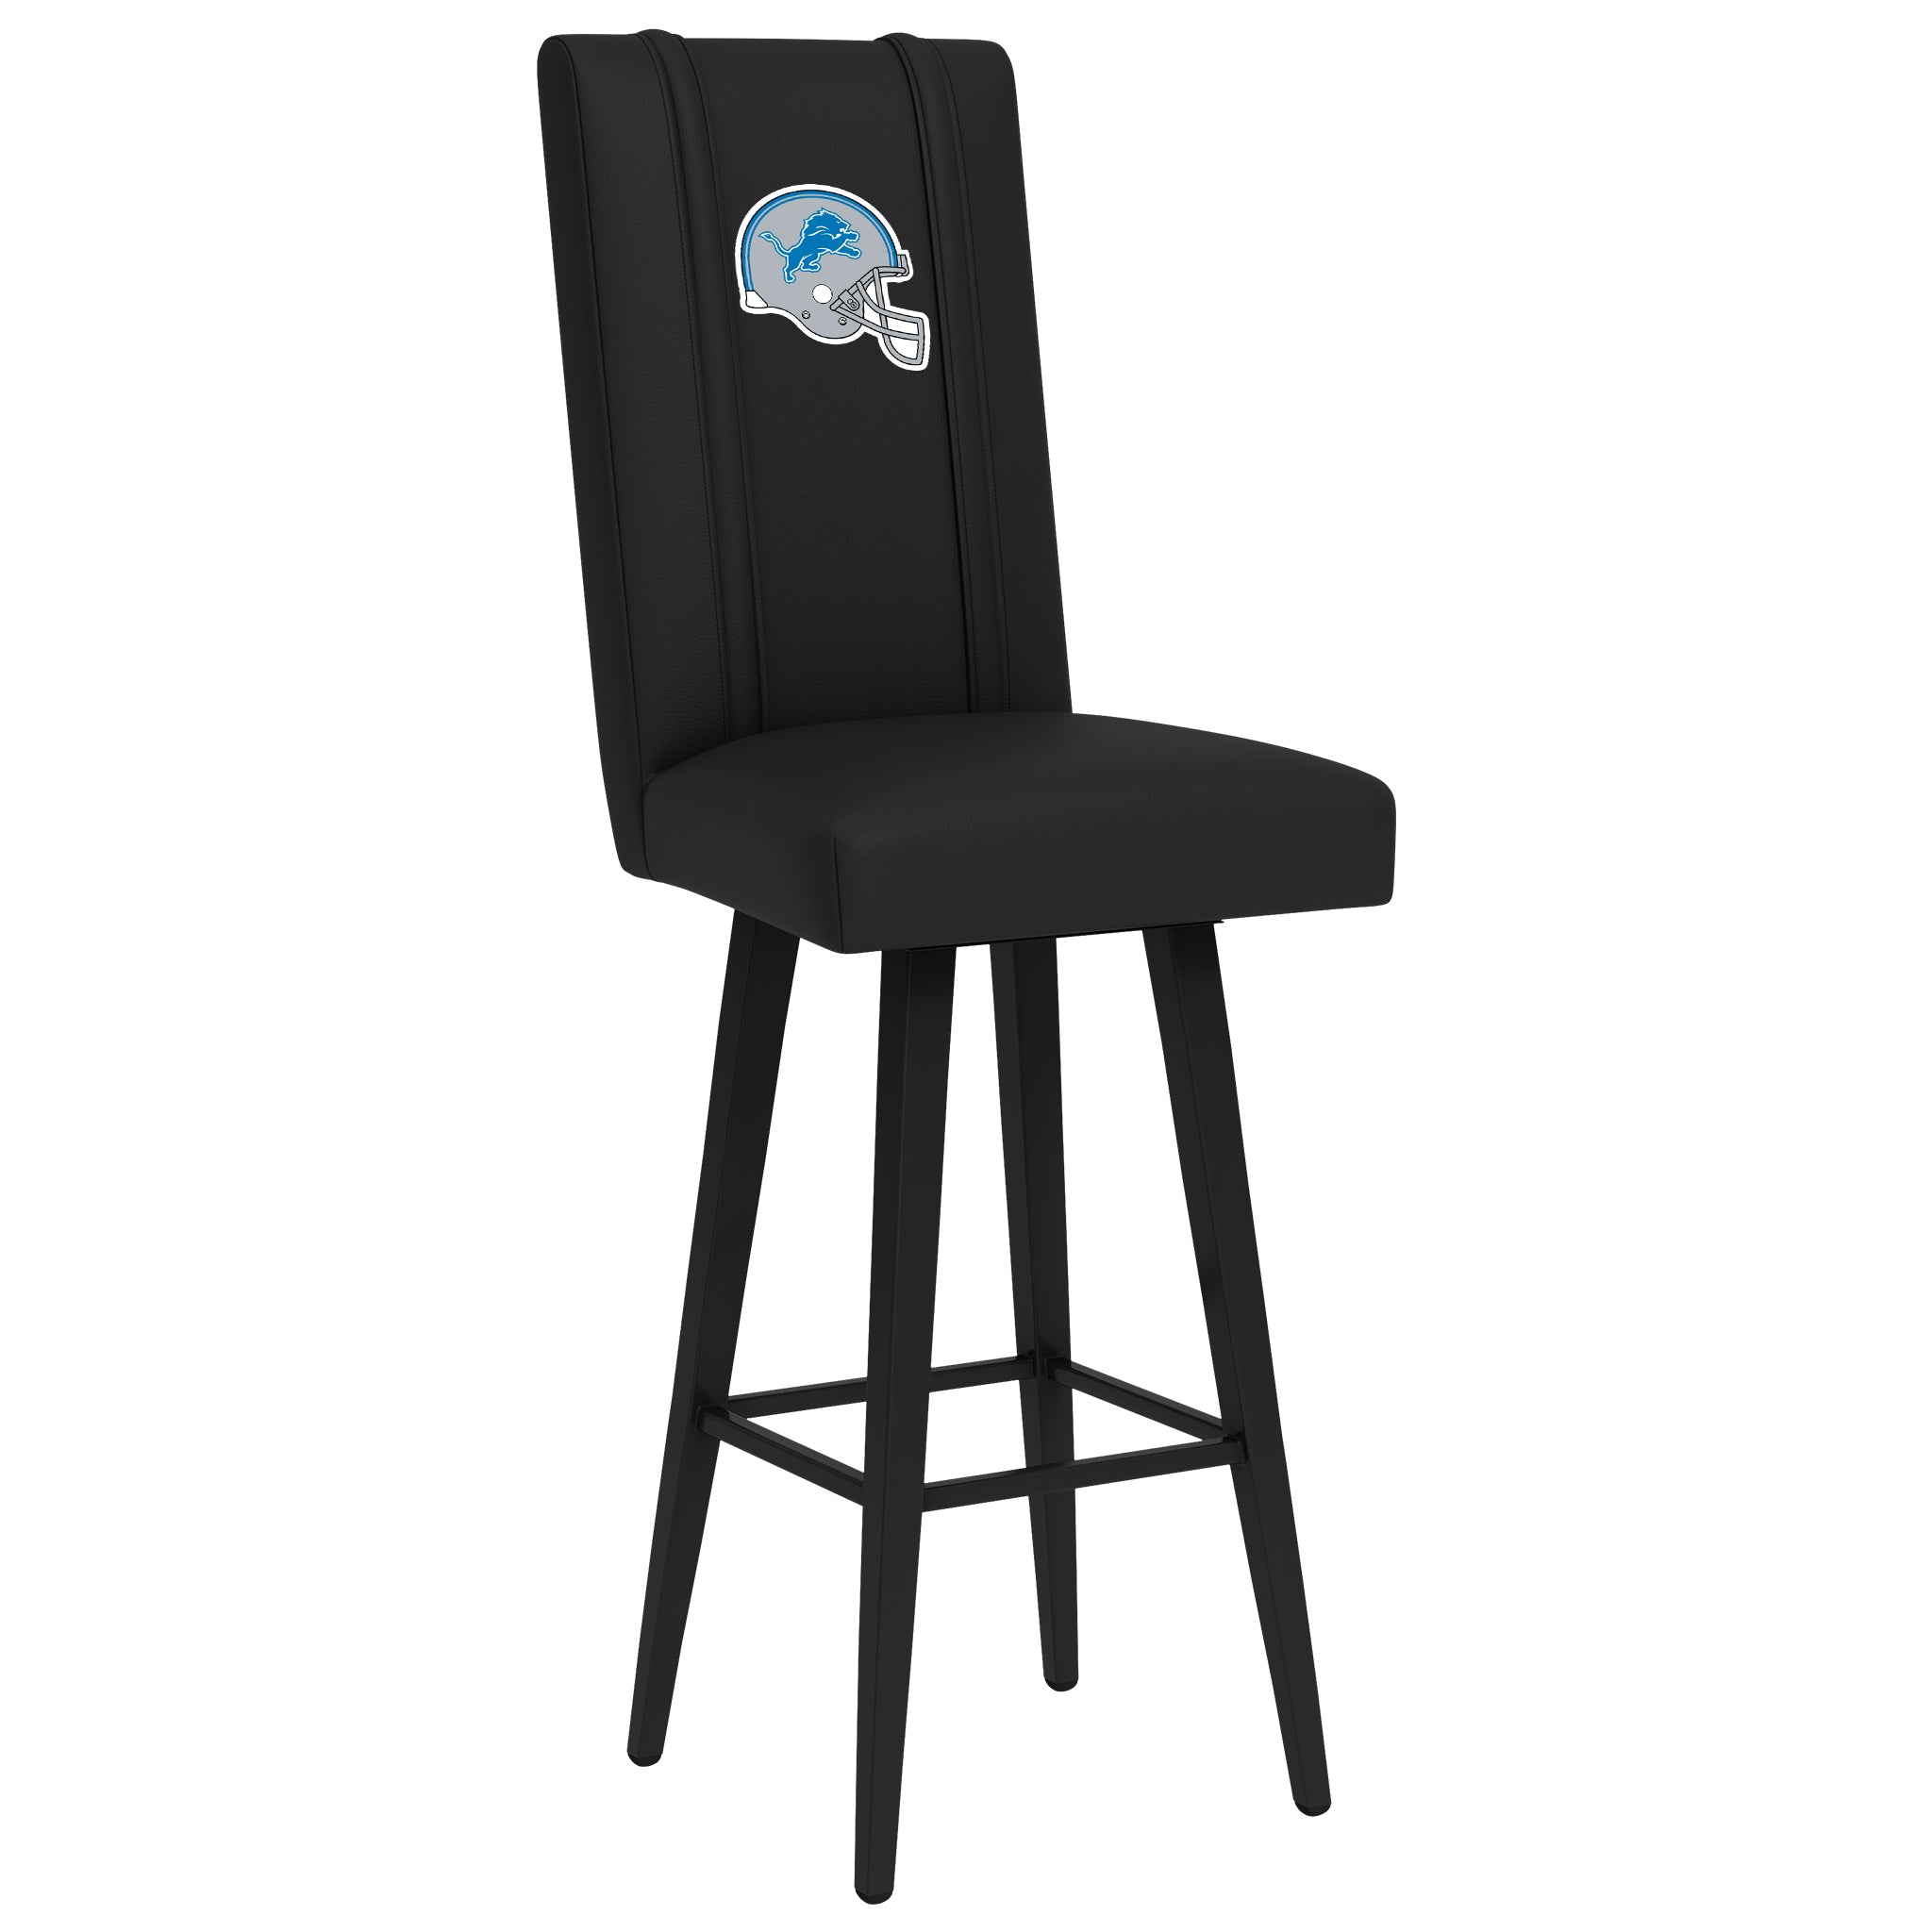 Detroit Lions Swivel Bar Stool - Chair - Furniture - Kitchen